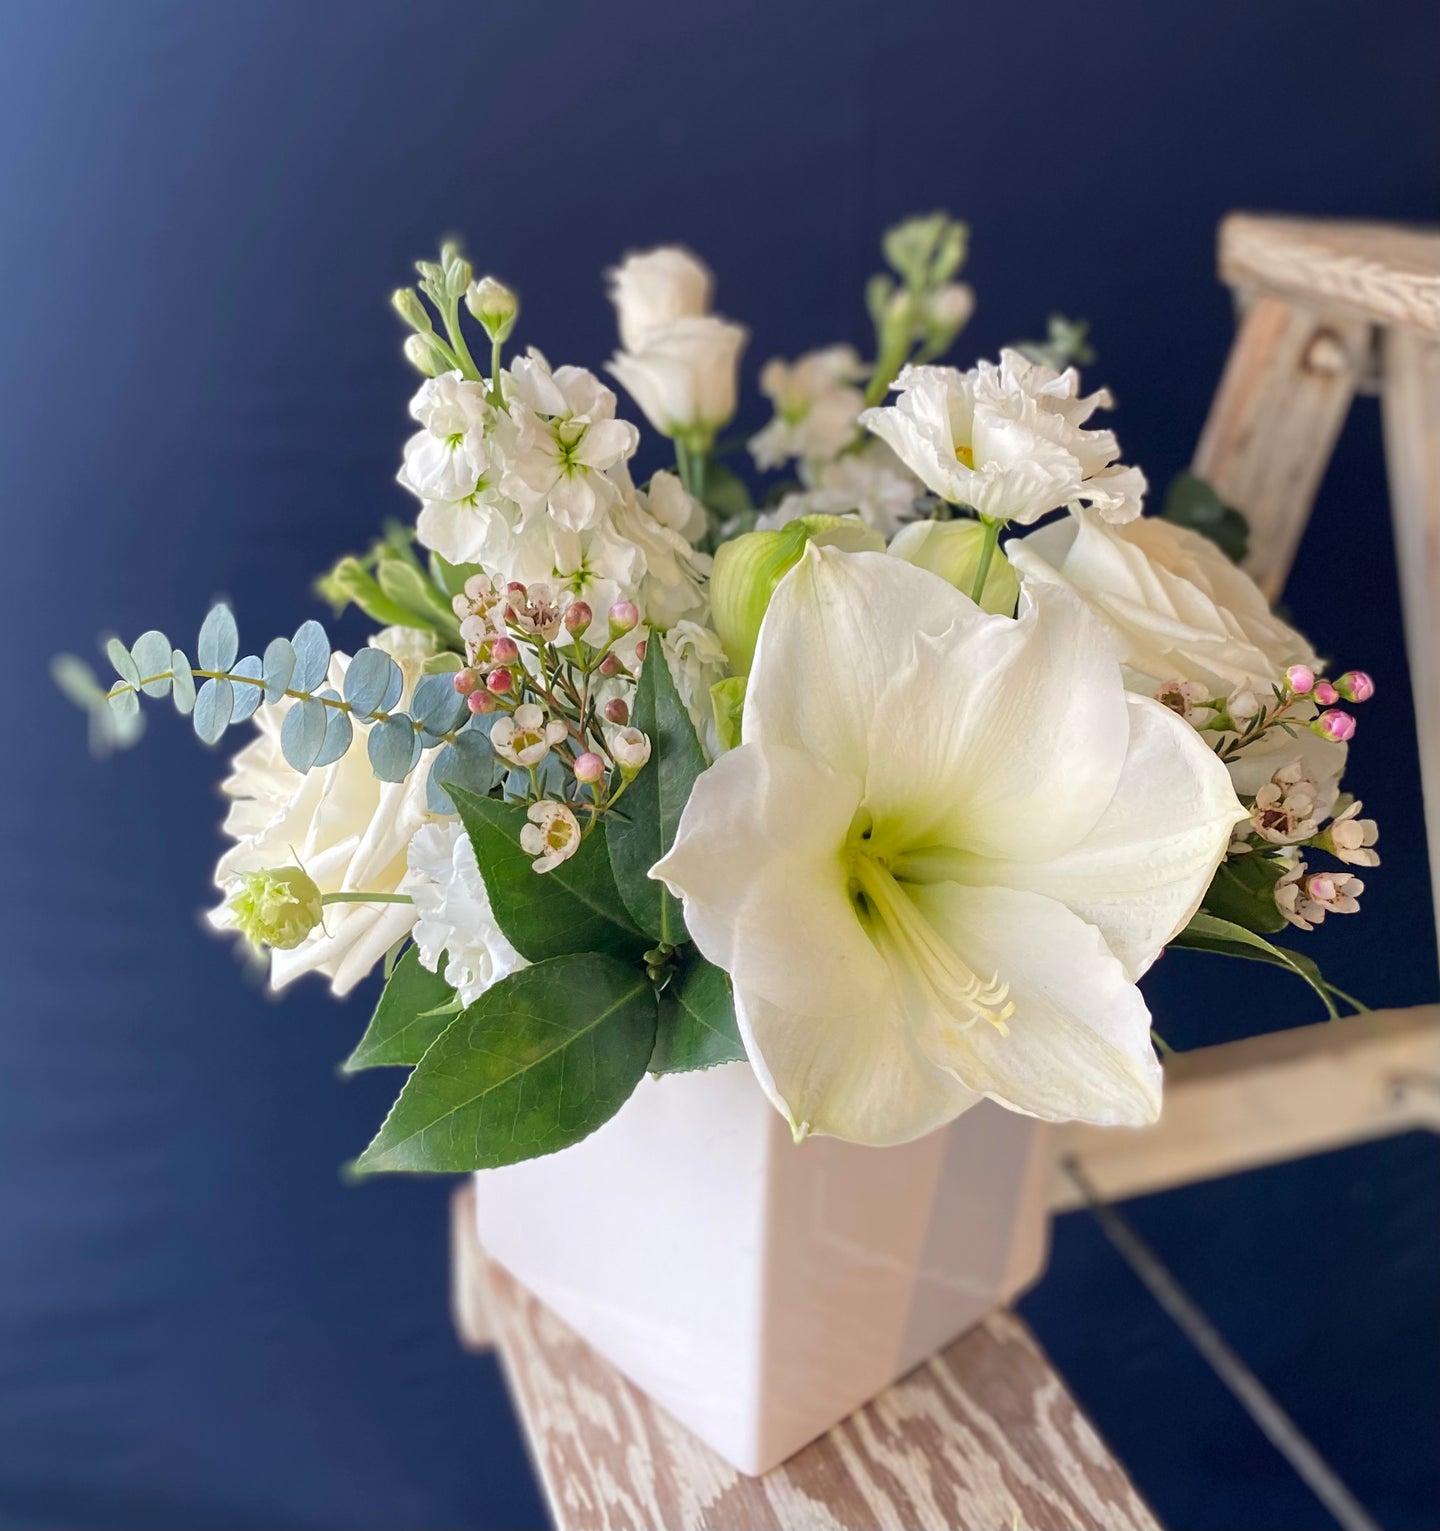 White and Green Vase arrangements